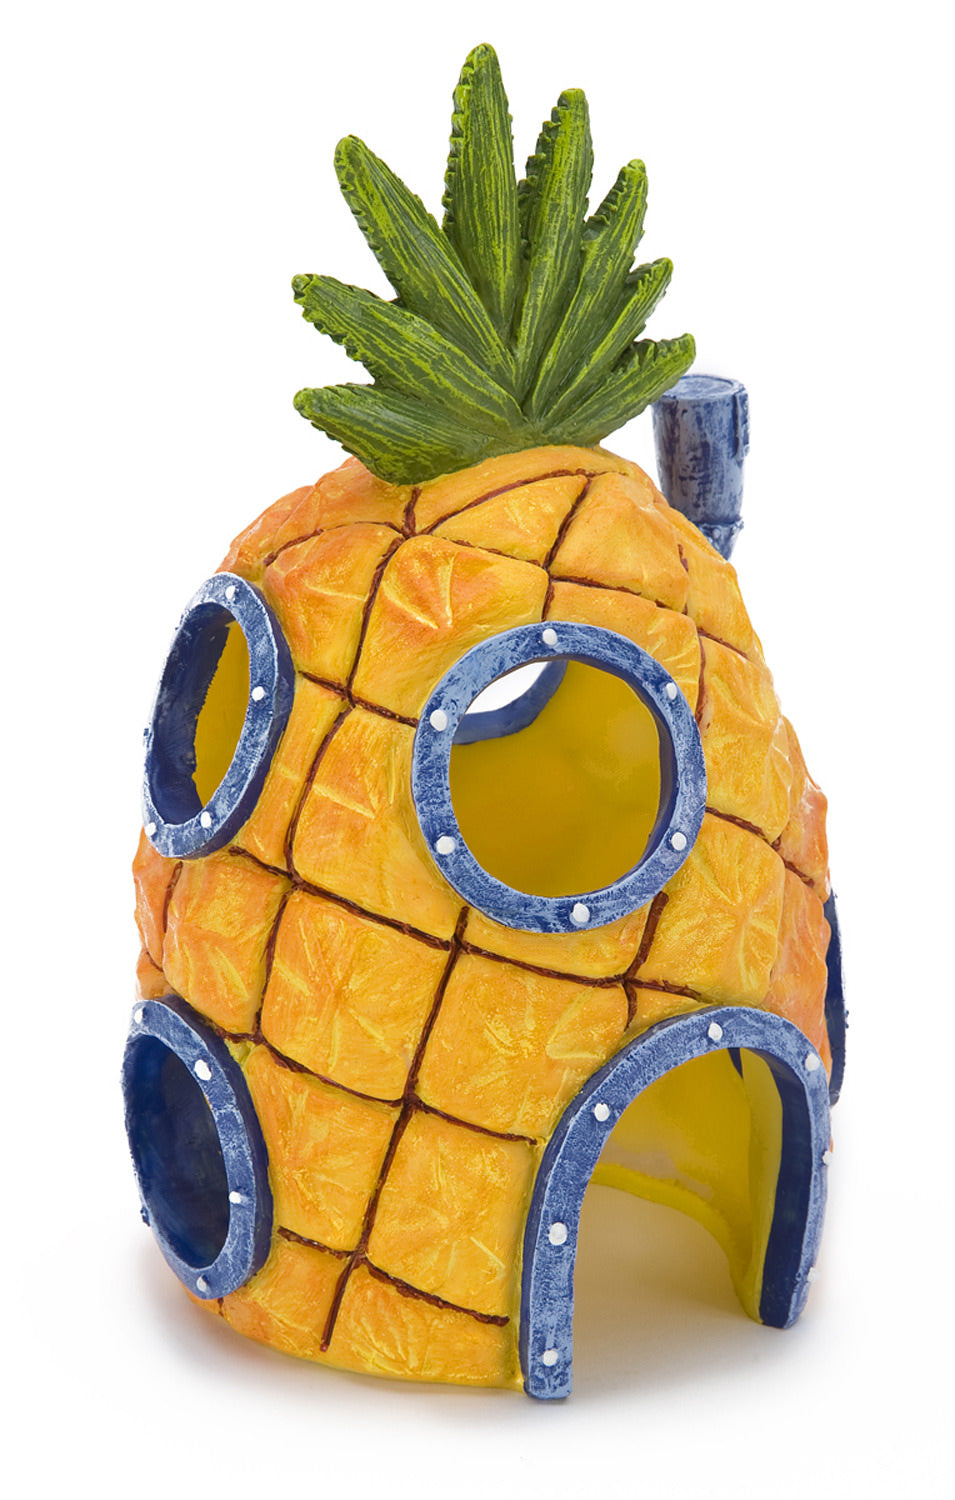 SpongeBob's Pineapple Home